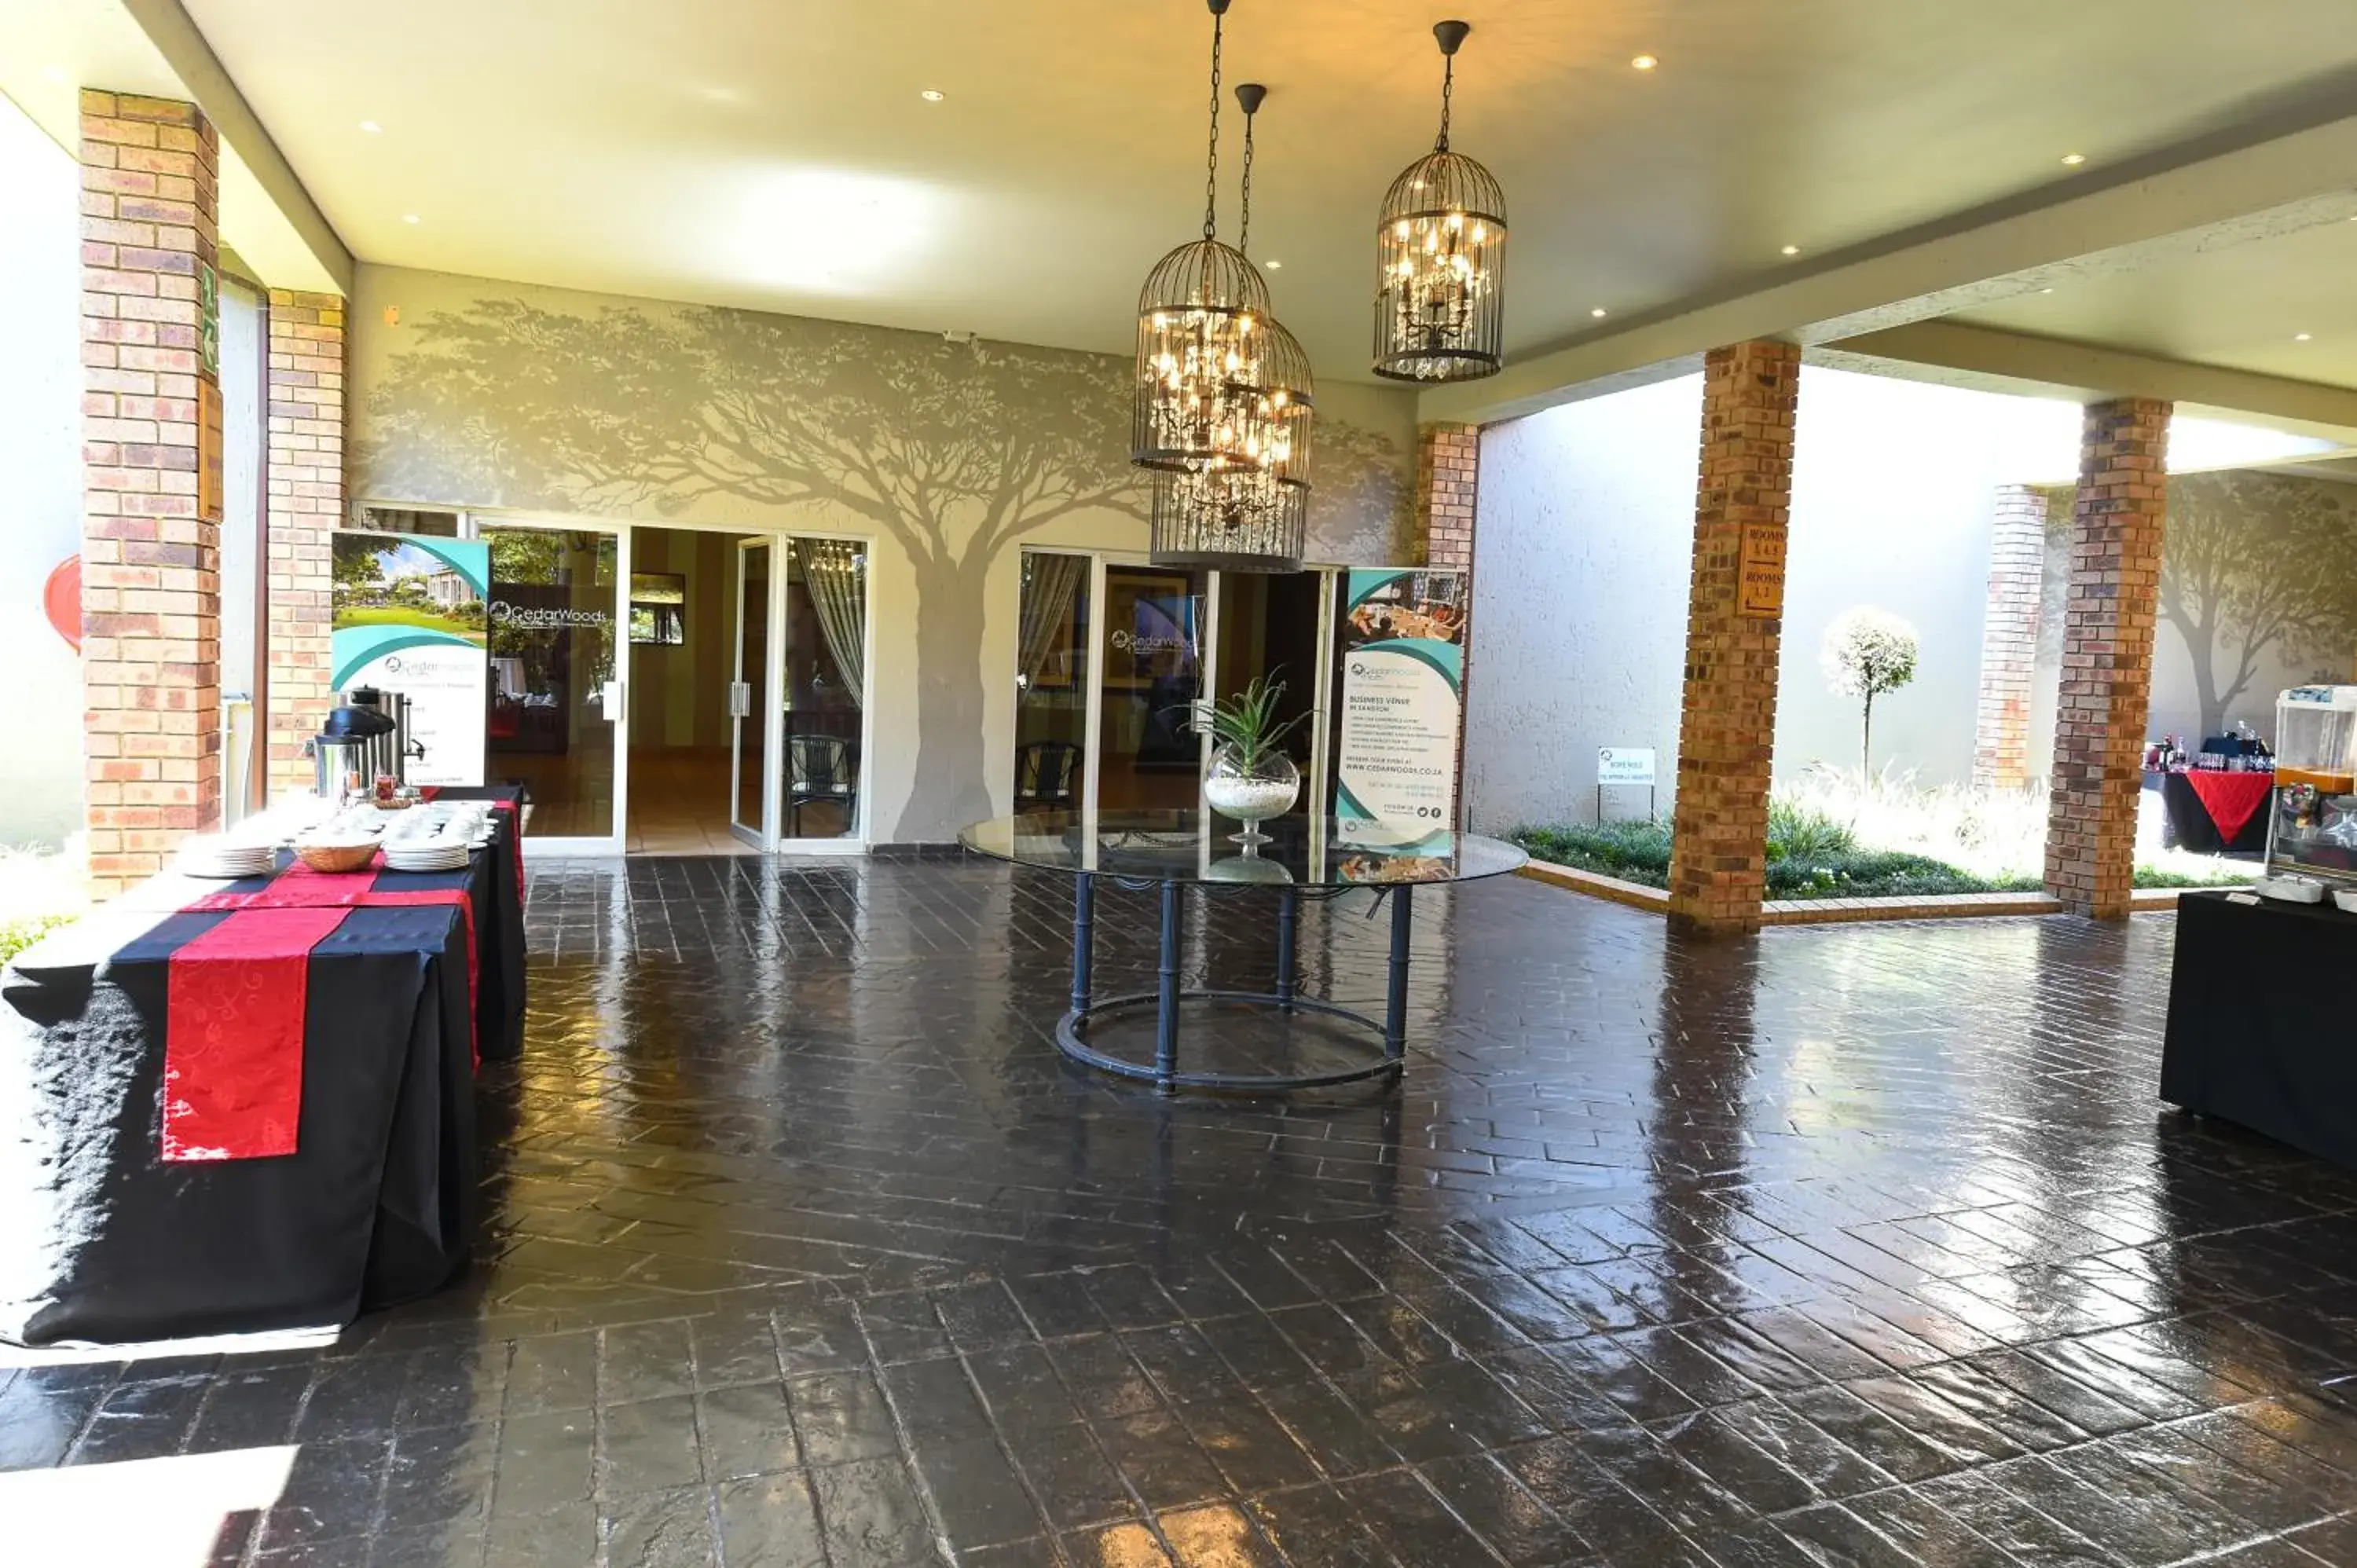 Lobby or reception in CedarWoods of Sandton